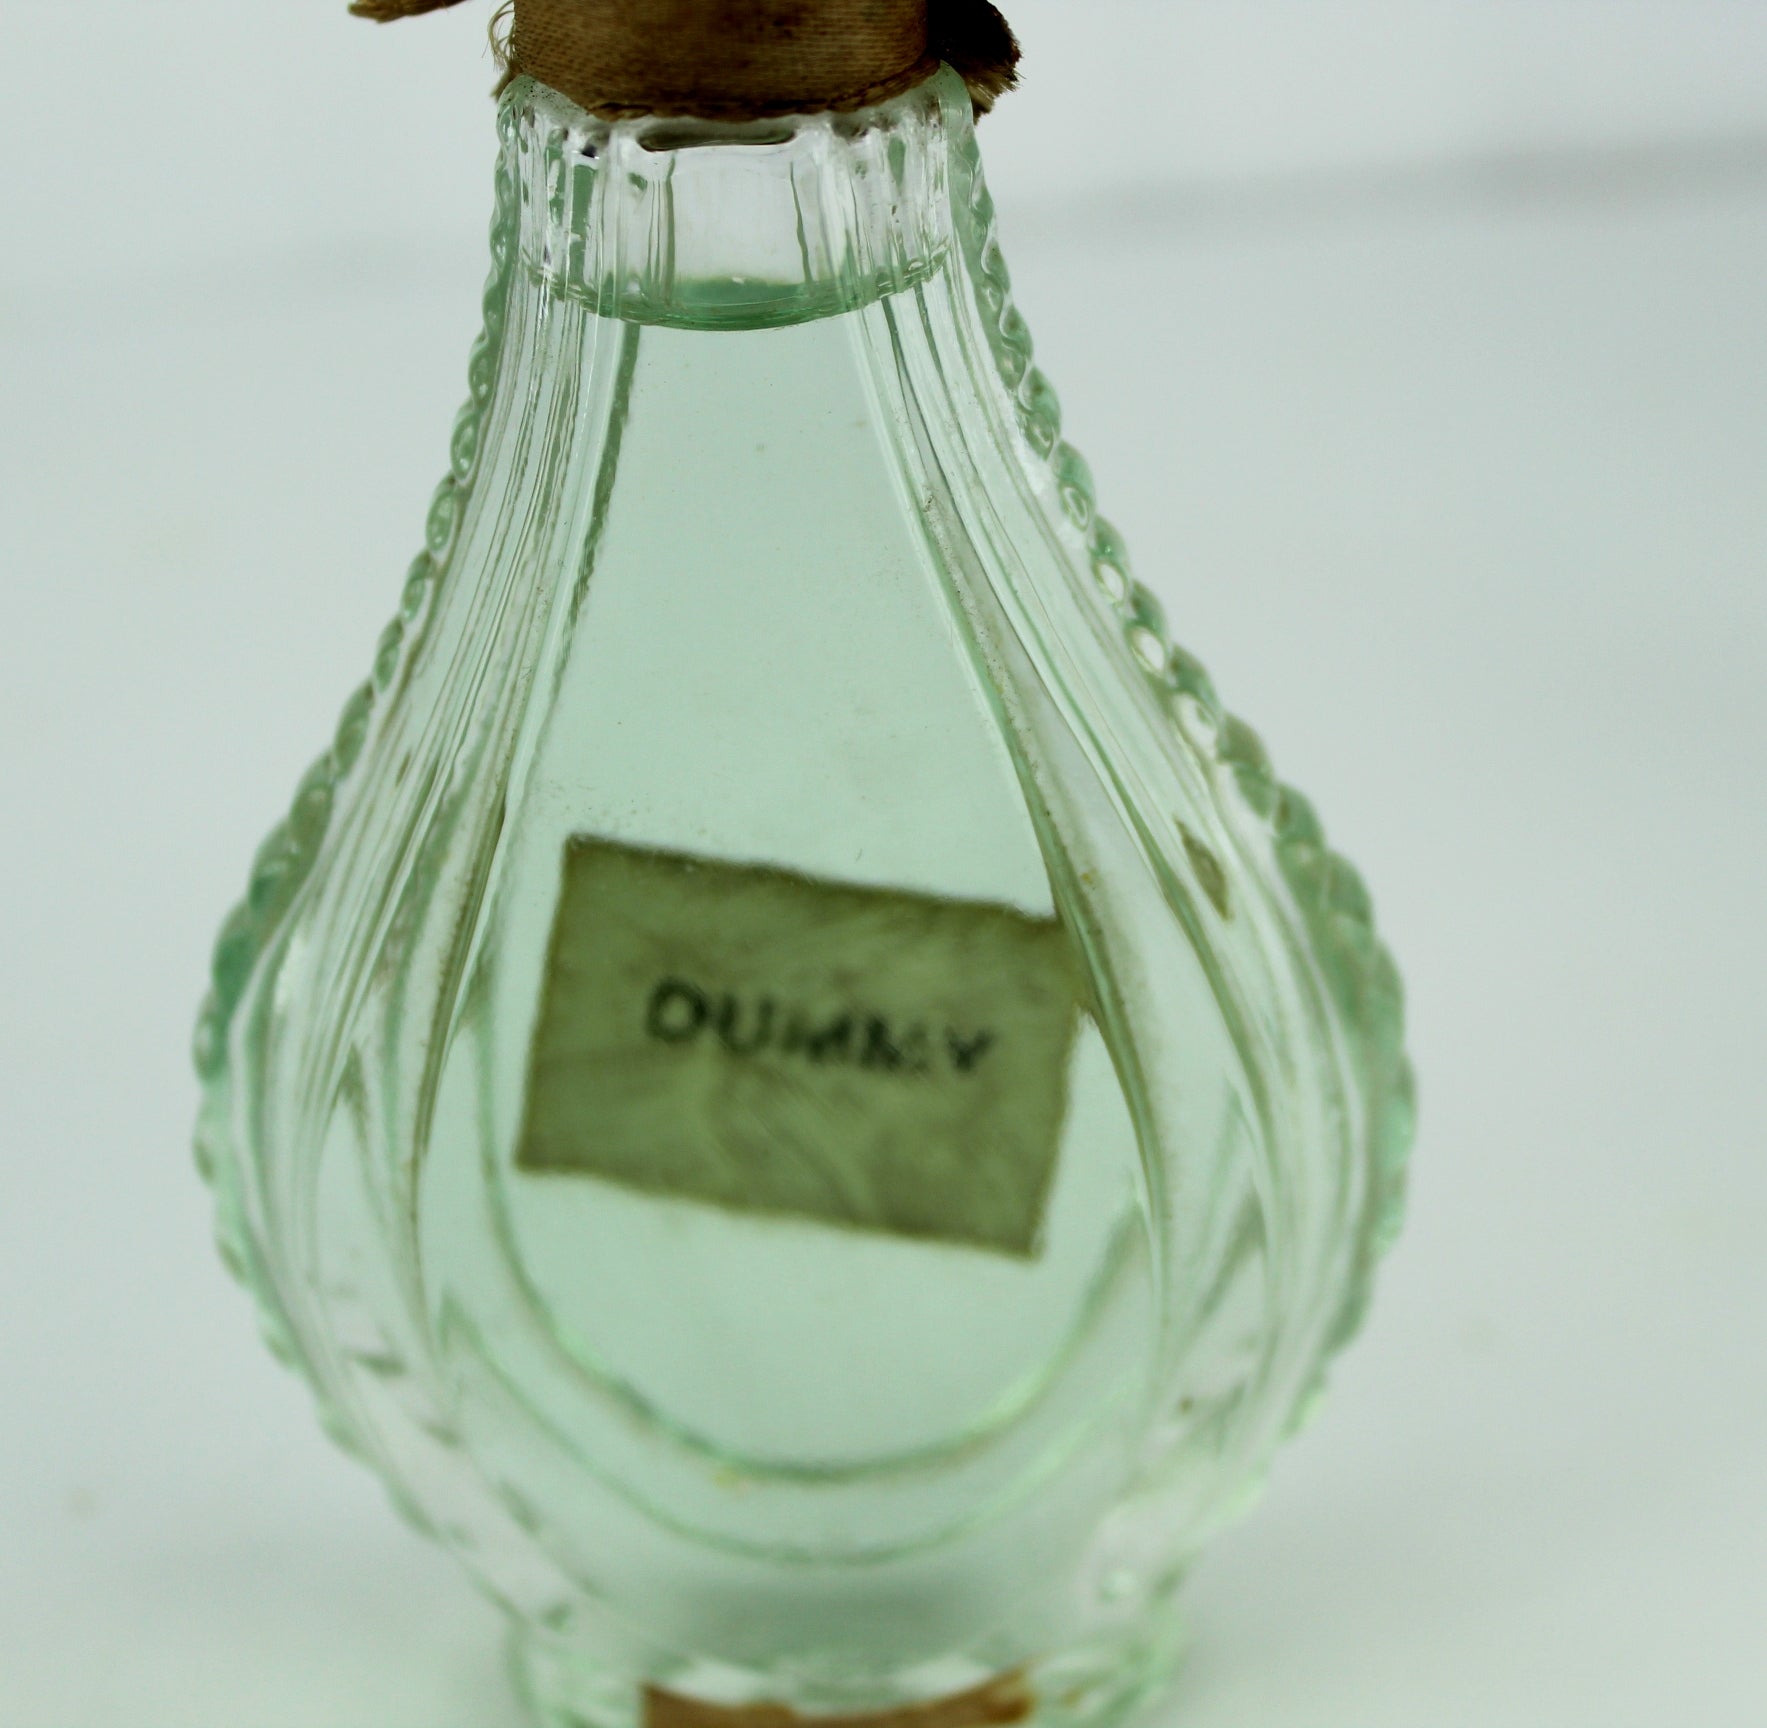 Old Chantilly Houbigant Launched 1941 Dummy Factice Perfume Bottle 2 Oz 4 3/4" dummy marked inside label reverse